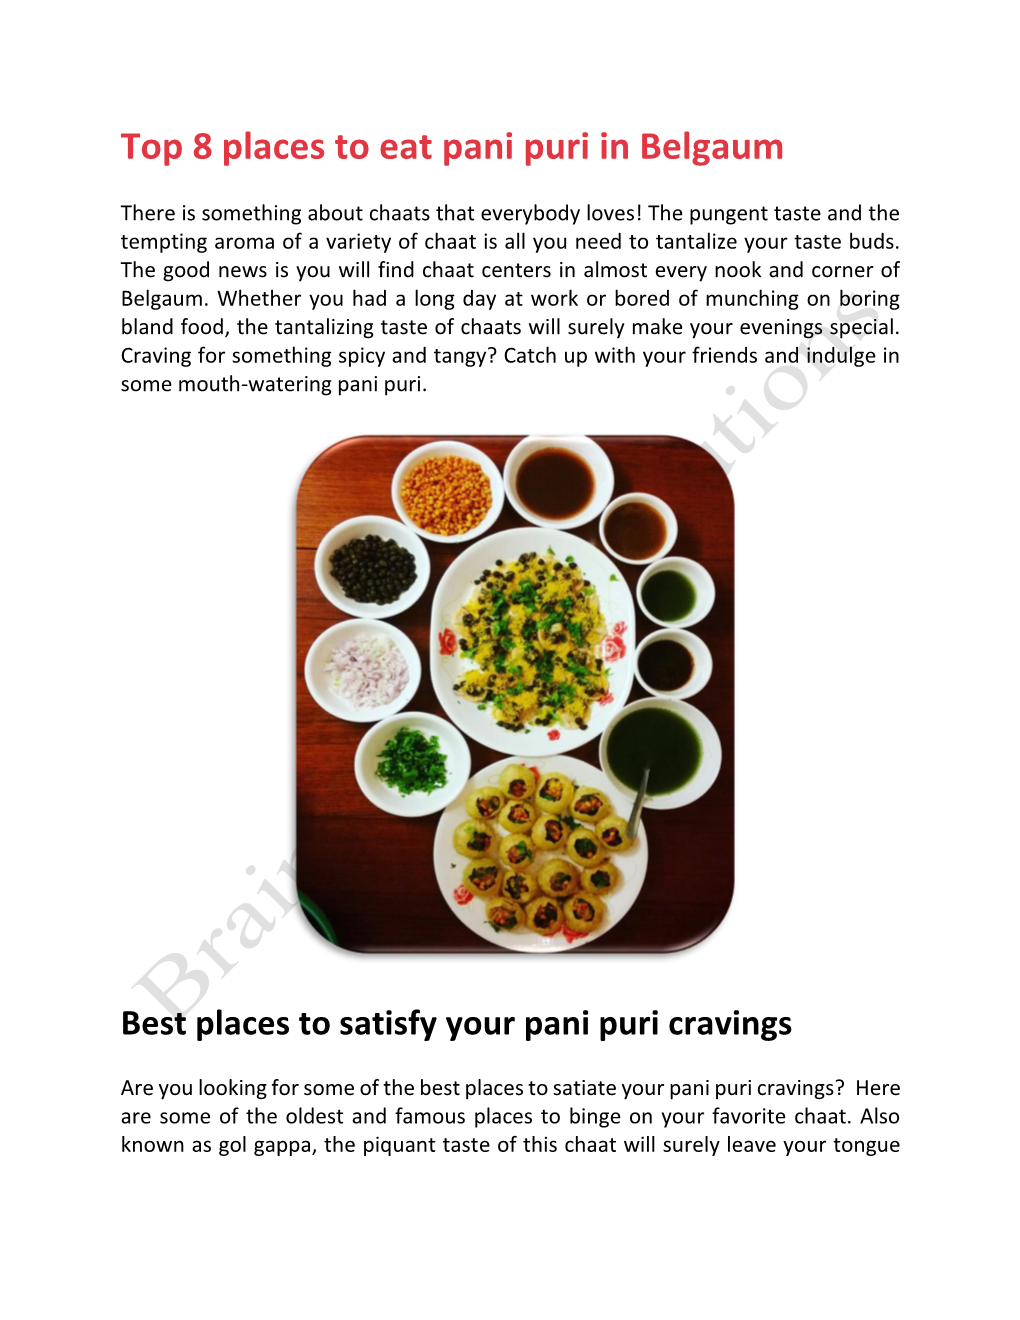 Top 8 Places to Eat Pani Puri in Belgaum Food